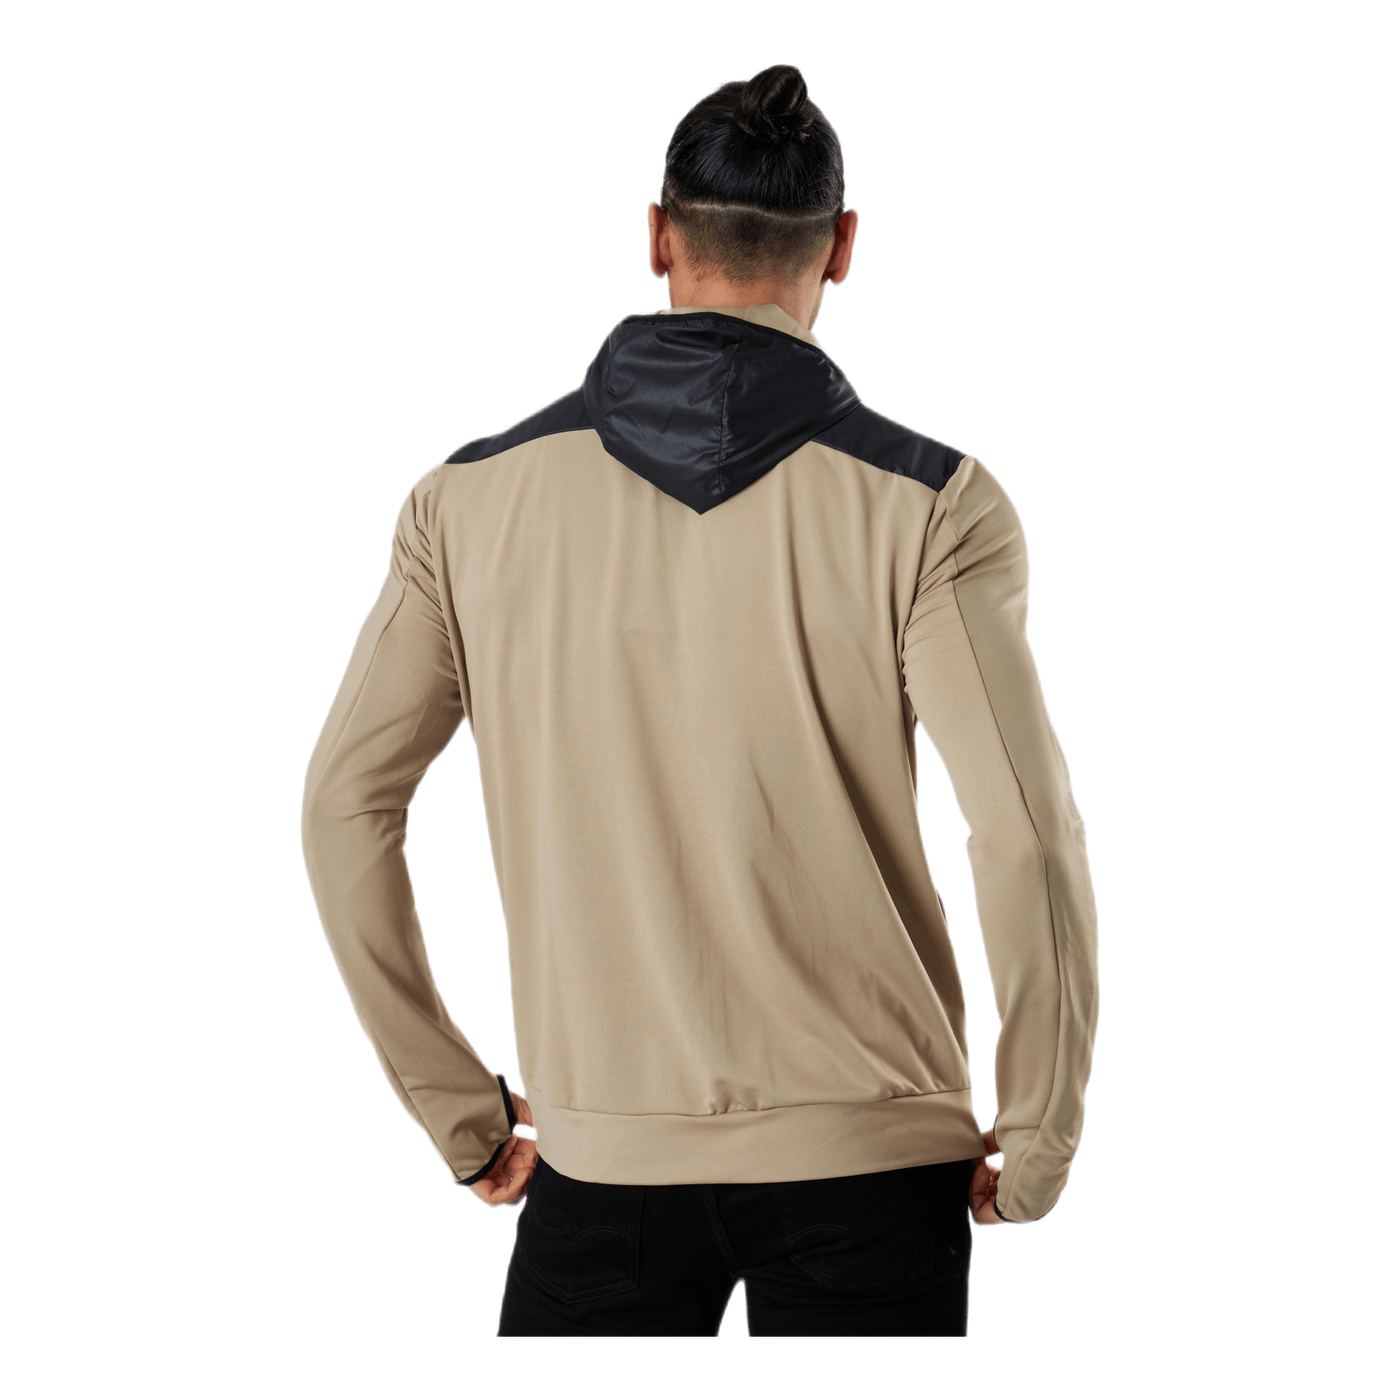 ADV Charge Jersey Hood Jacket Black/Beige